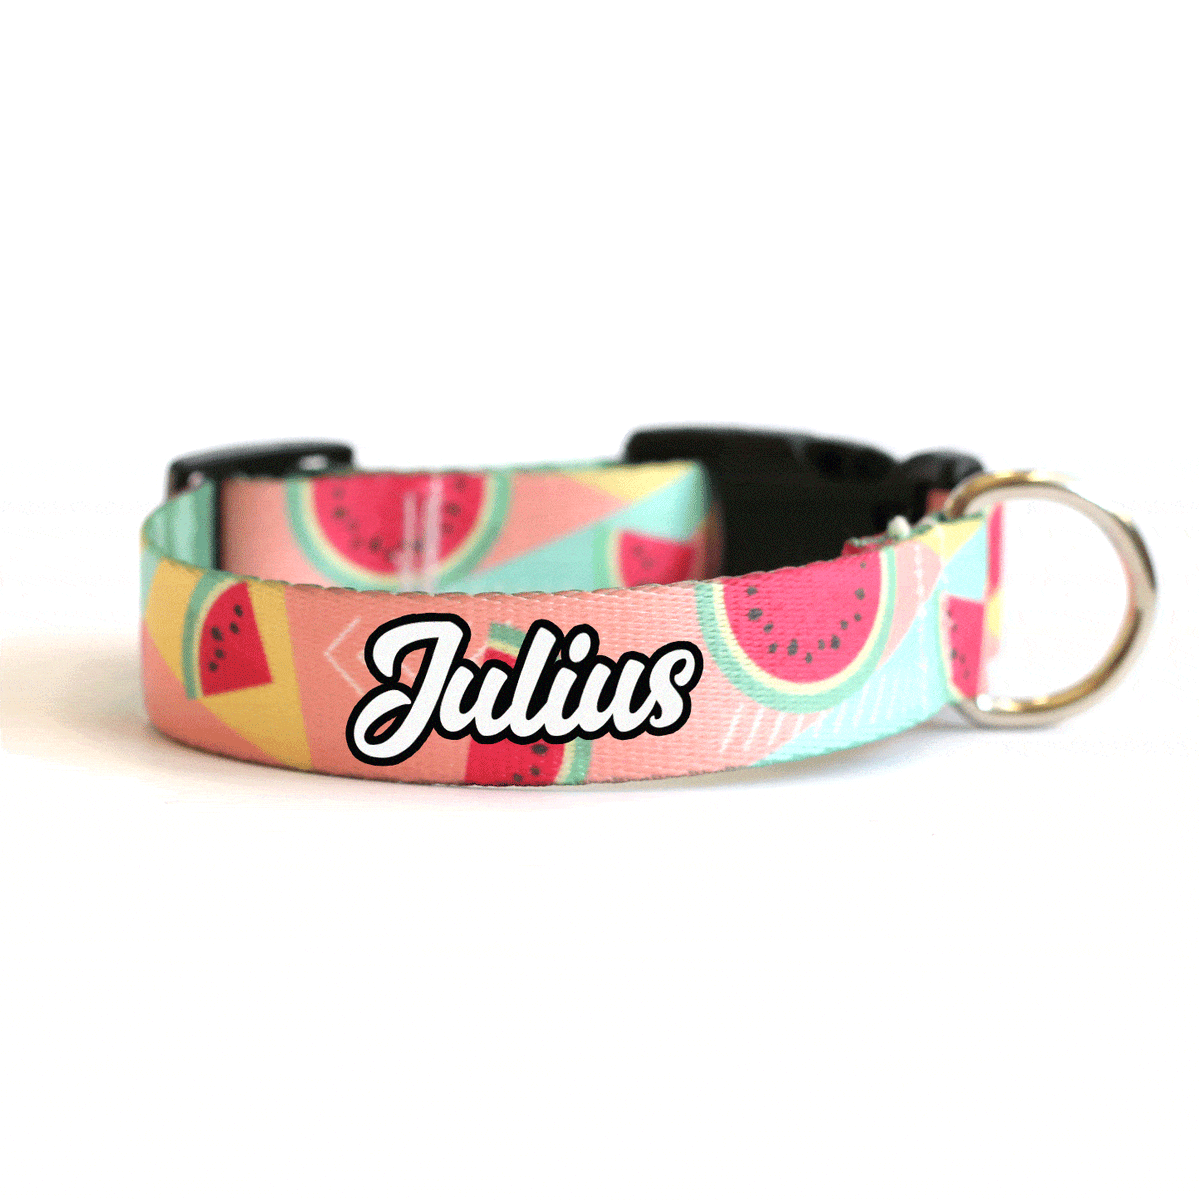 Watermelon Design Cute Dog Collar for Girls Boy Dogs Soft Fancy